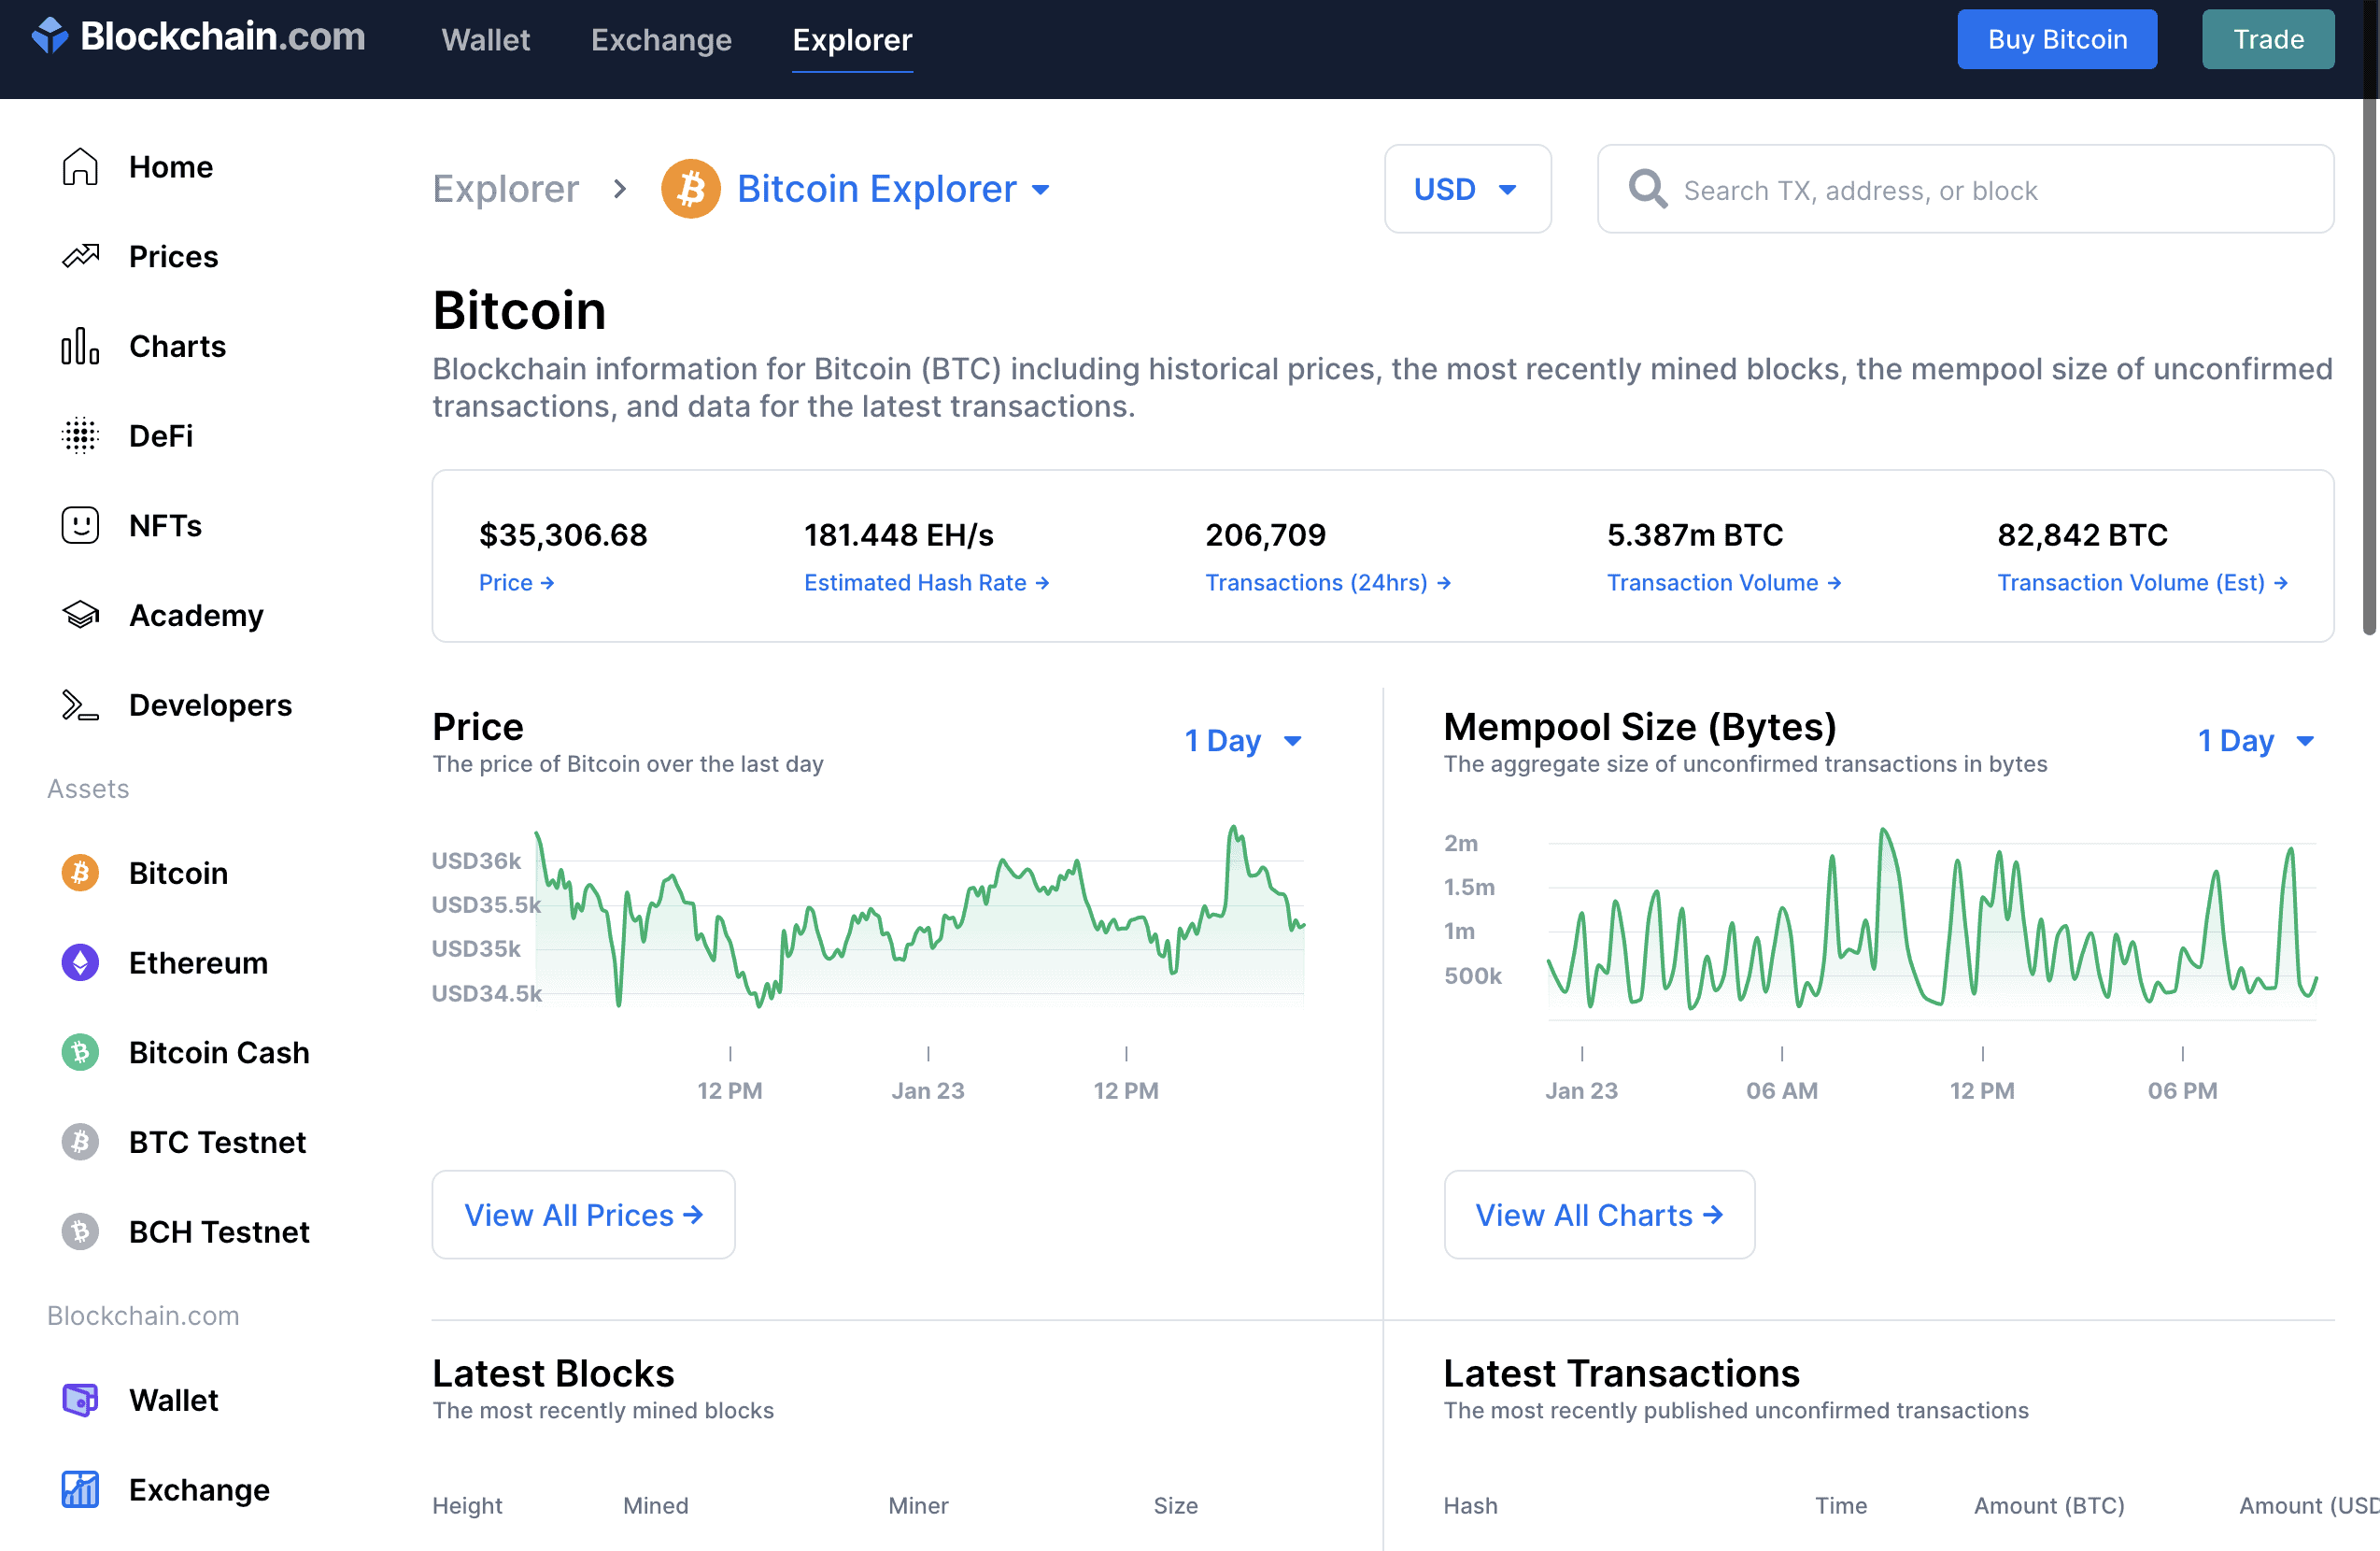 Blockchain.com Exchange homepage